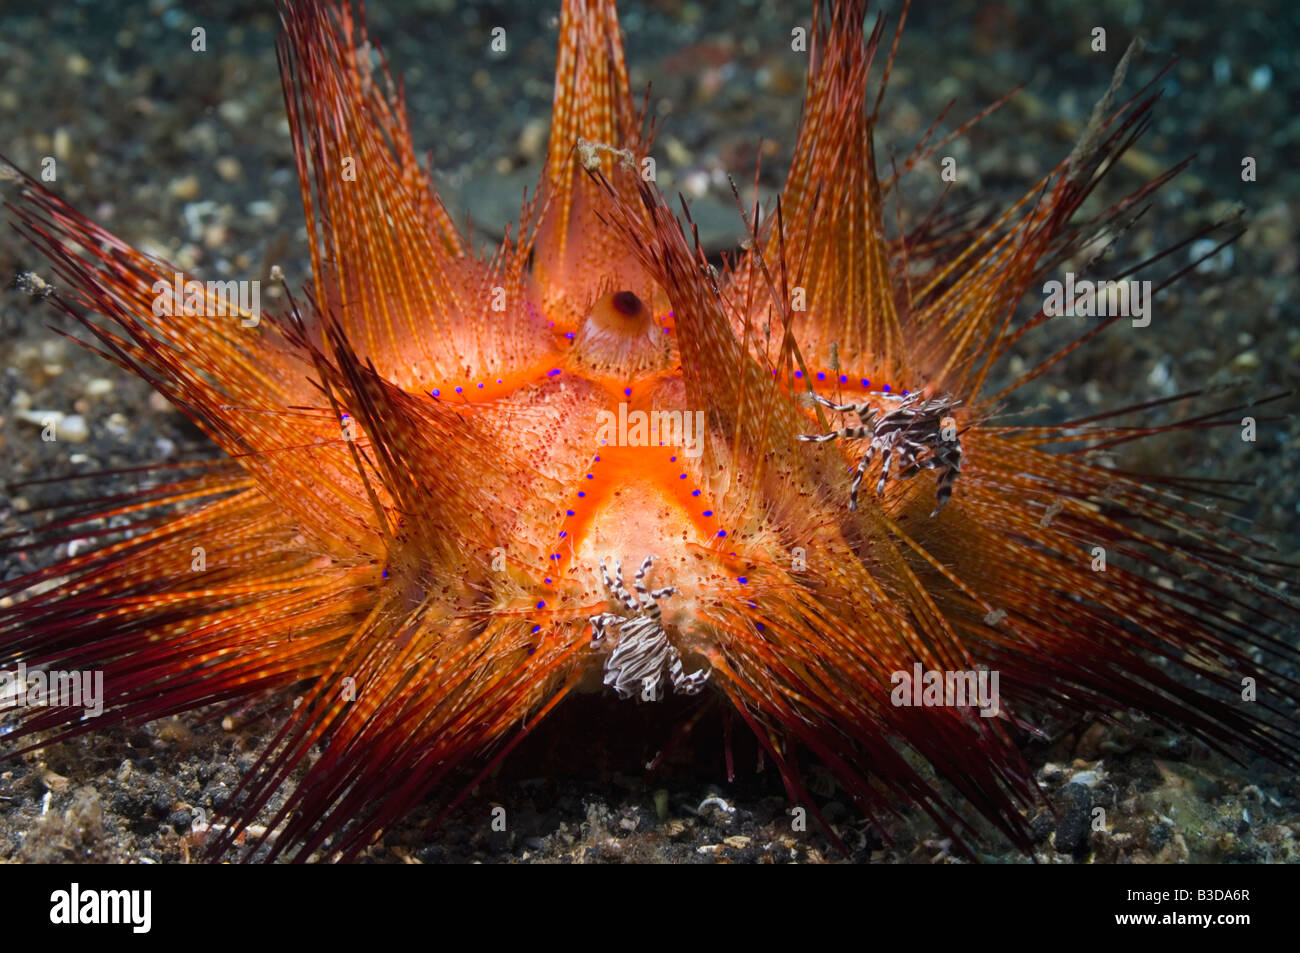 Urchin crabs Zebrida adamsii pair on a False fire urchin Astropyga radiata Stock Photo